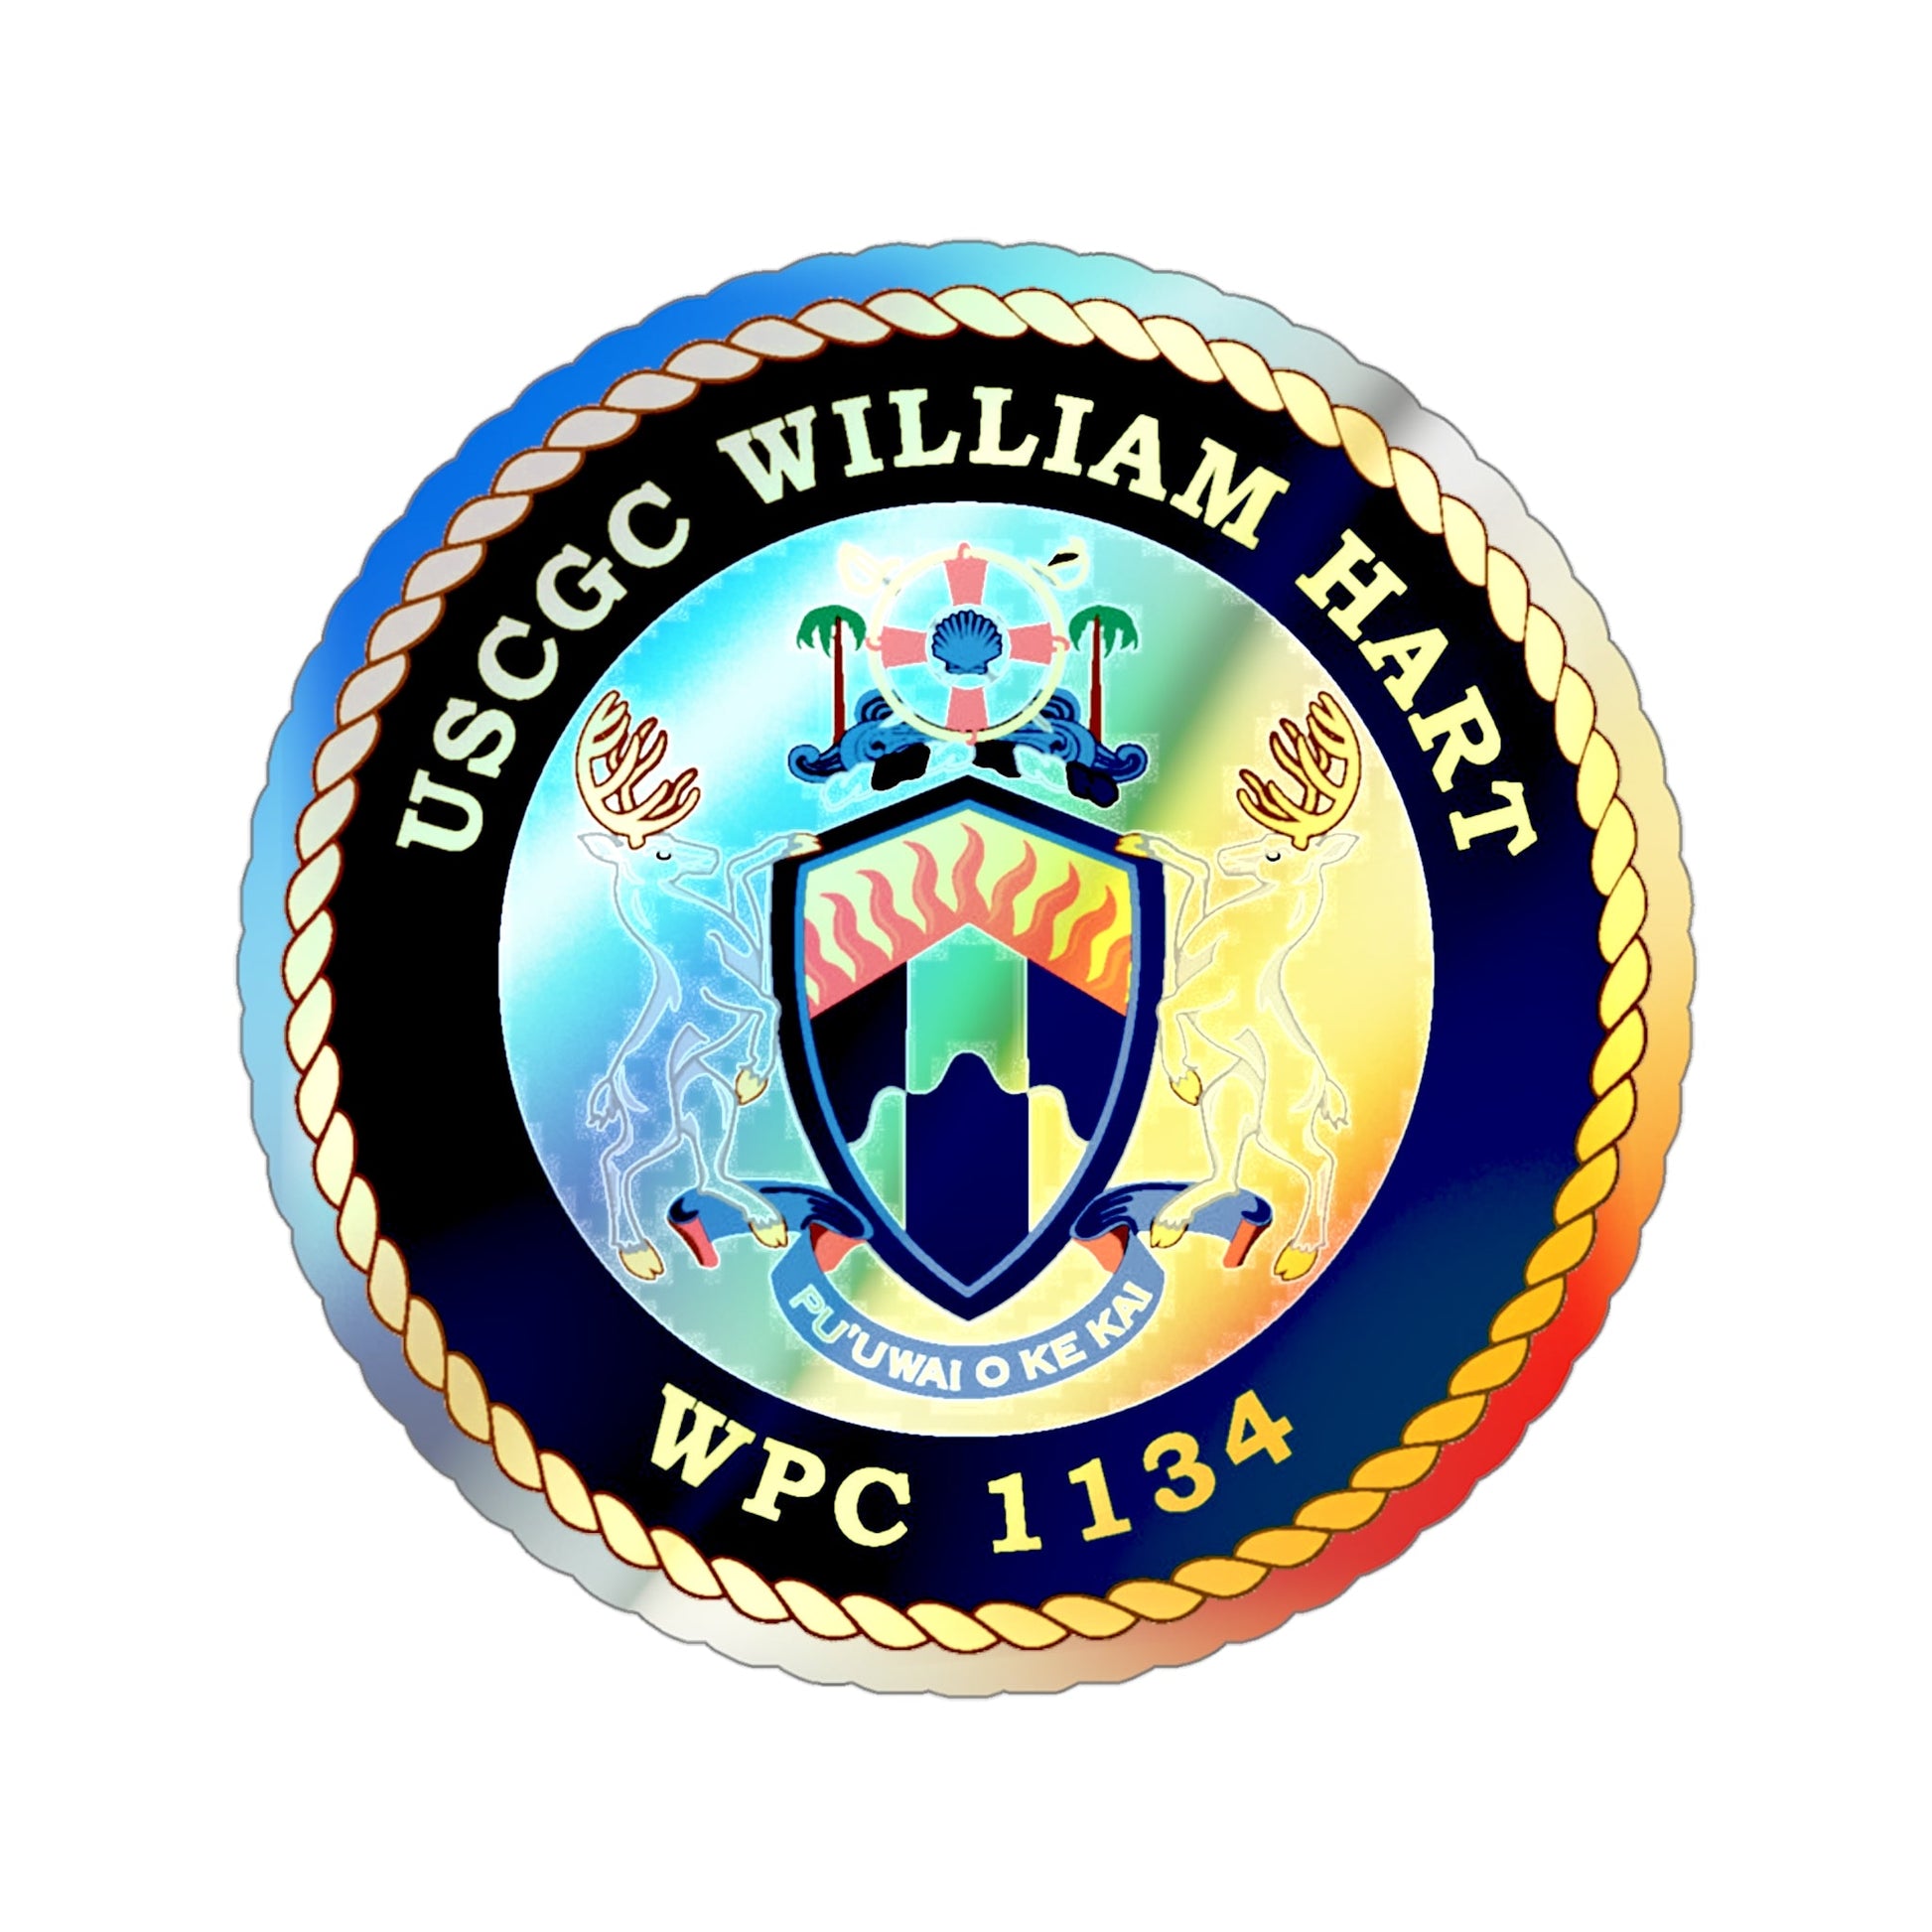 USCG C William Hart WPC 1134 (U.S. Coast Guard) Holographic STICKER Die-Cut Vinyl Decal-4 Inch-The Sticker Space